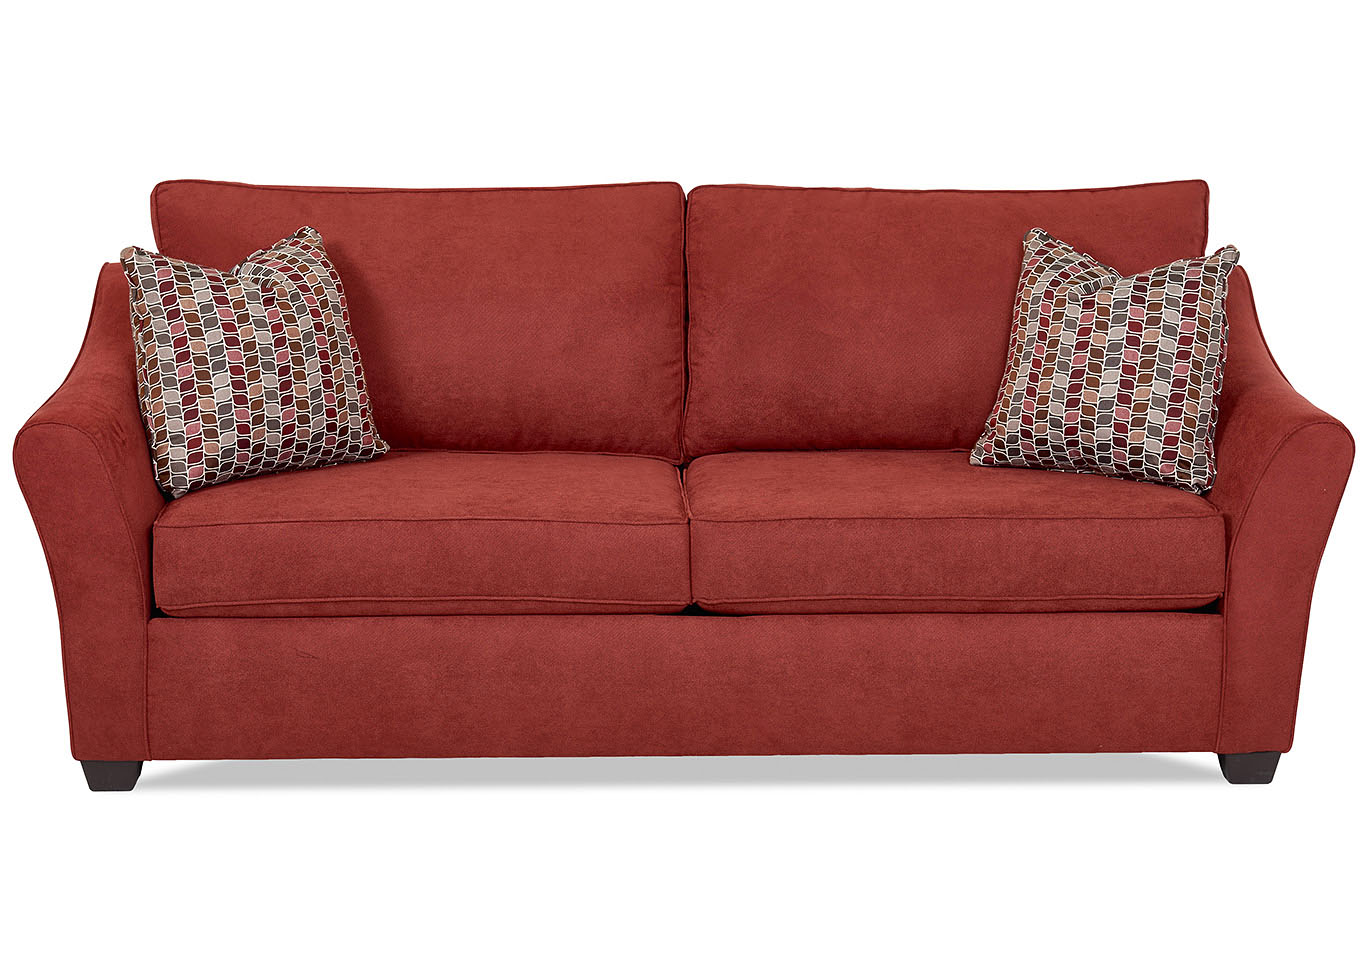 Linville Merlot Stationary Fabric Sofa,Klaussner Home Furnishings